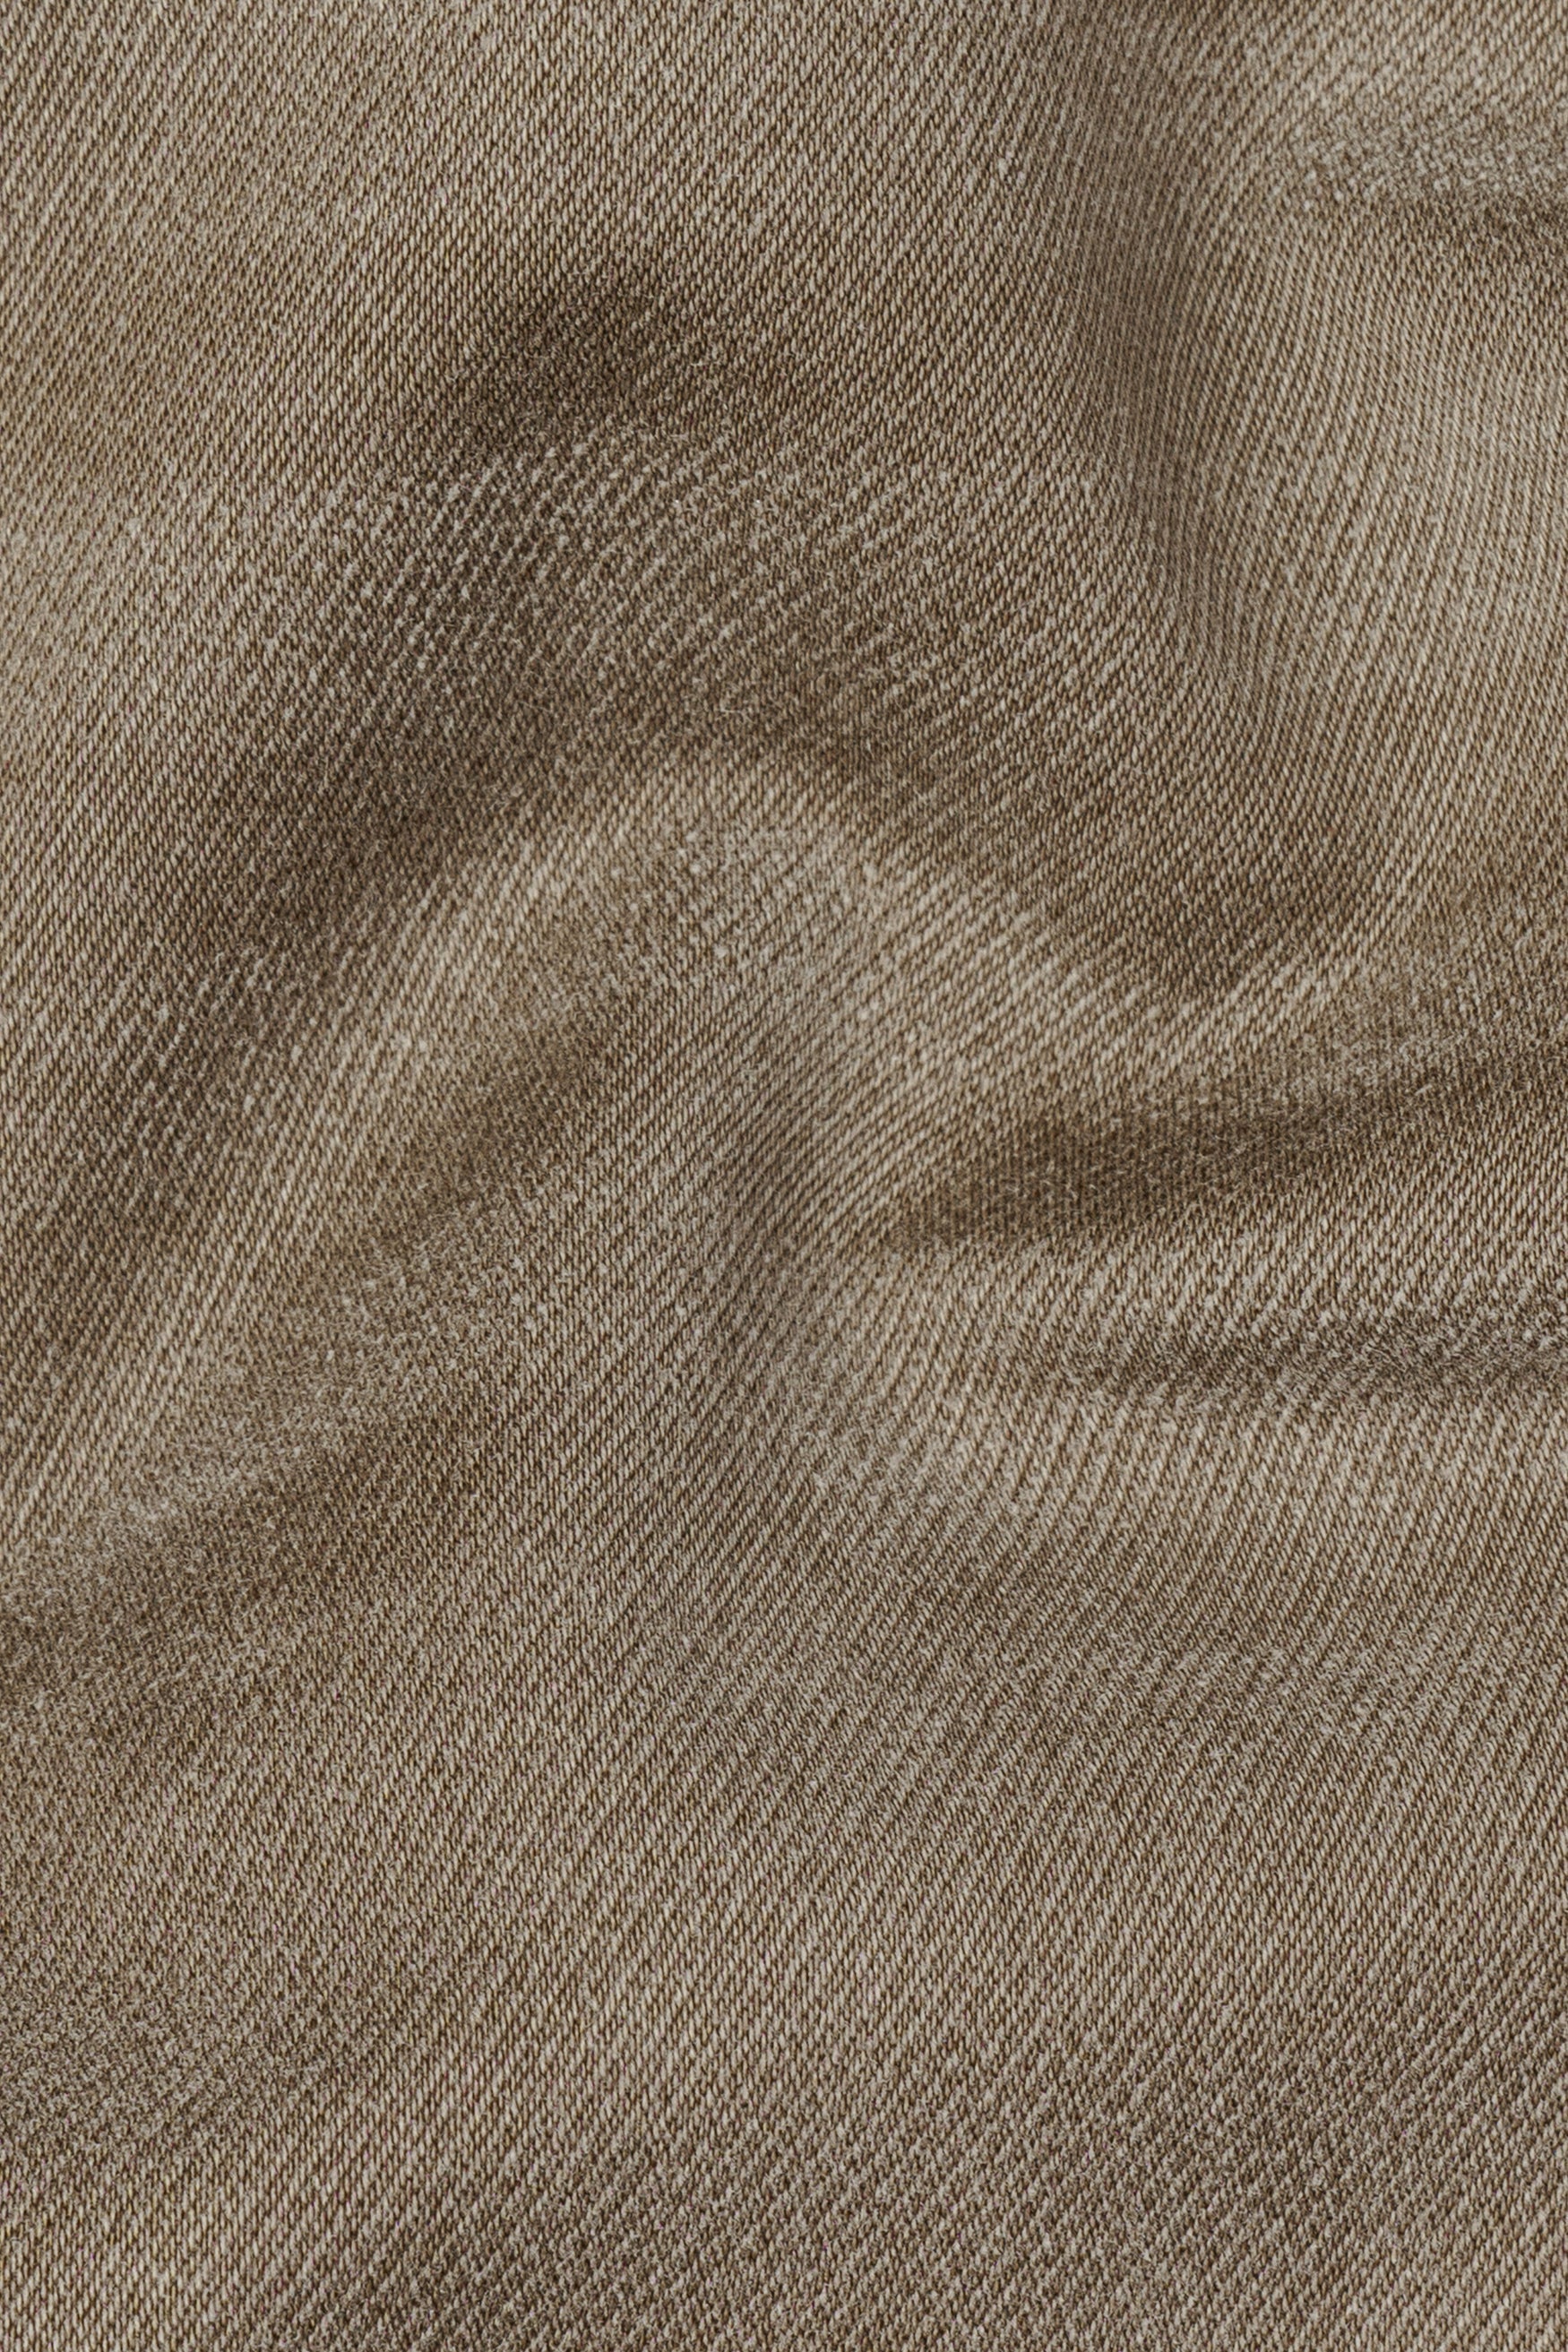 Sandstone Brown with zipper Pockets Whiskering Designer Denim